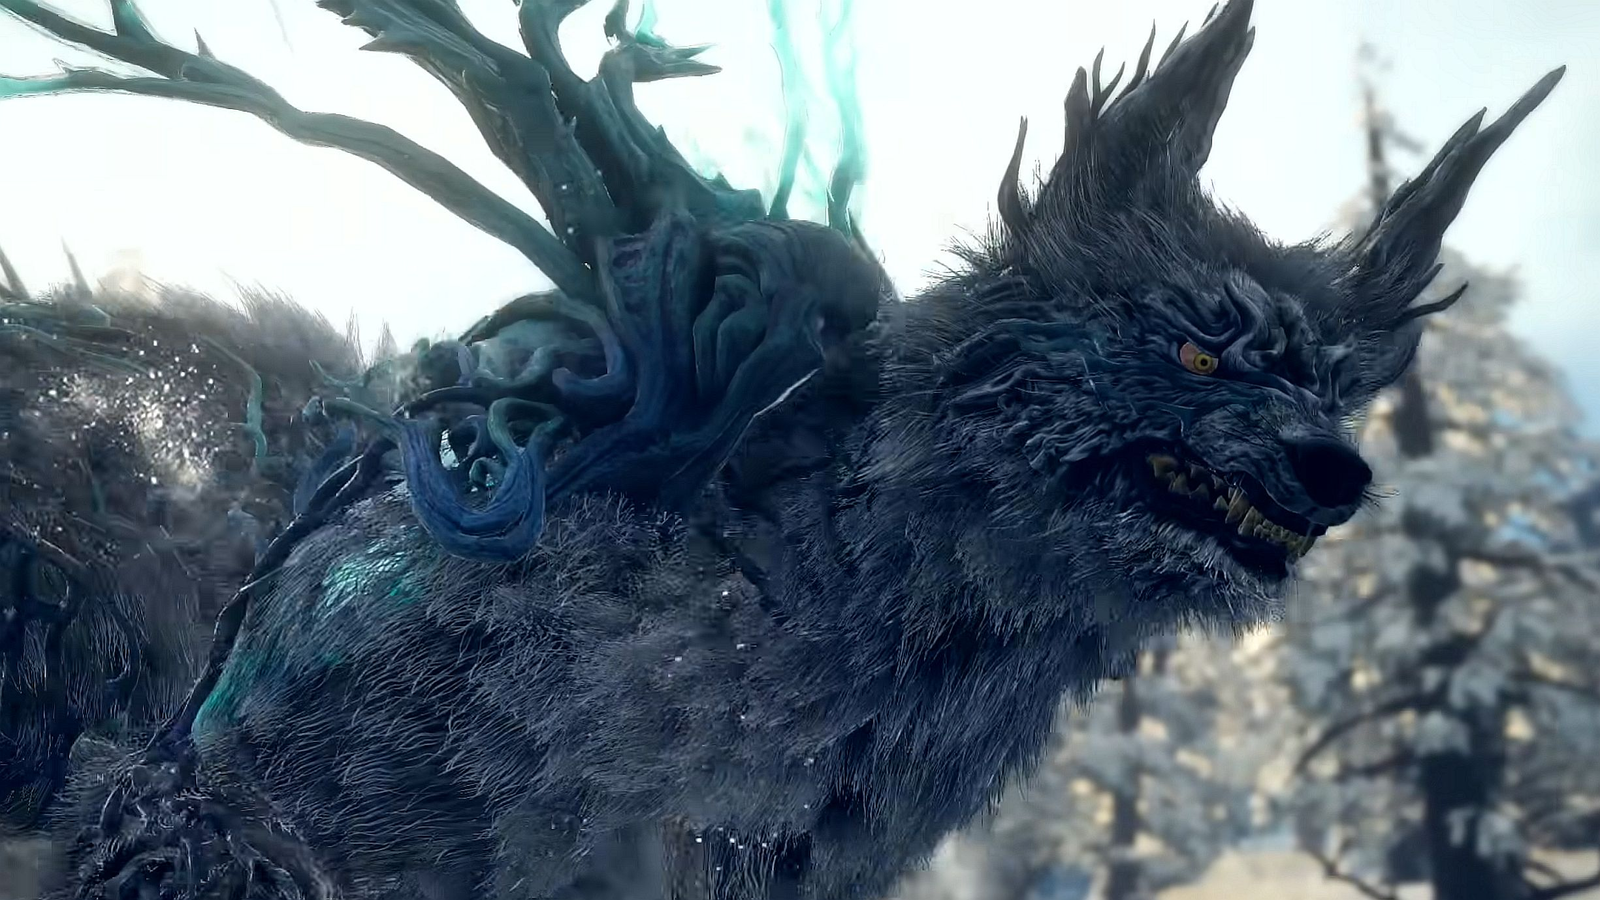 Wild Hearts got a 7-minute gameplay trailer showcasing a massive monster  hunt